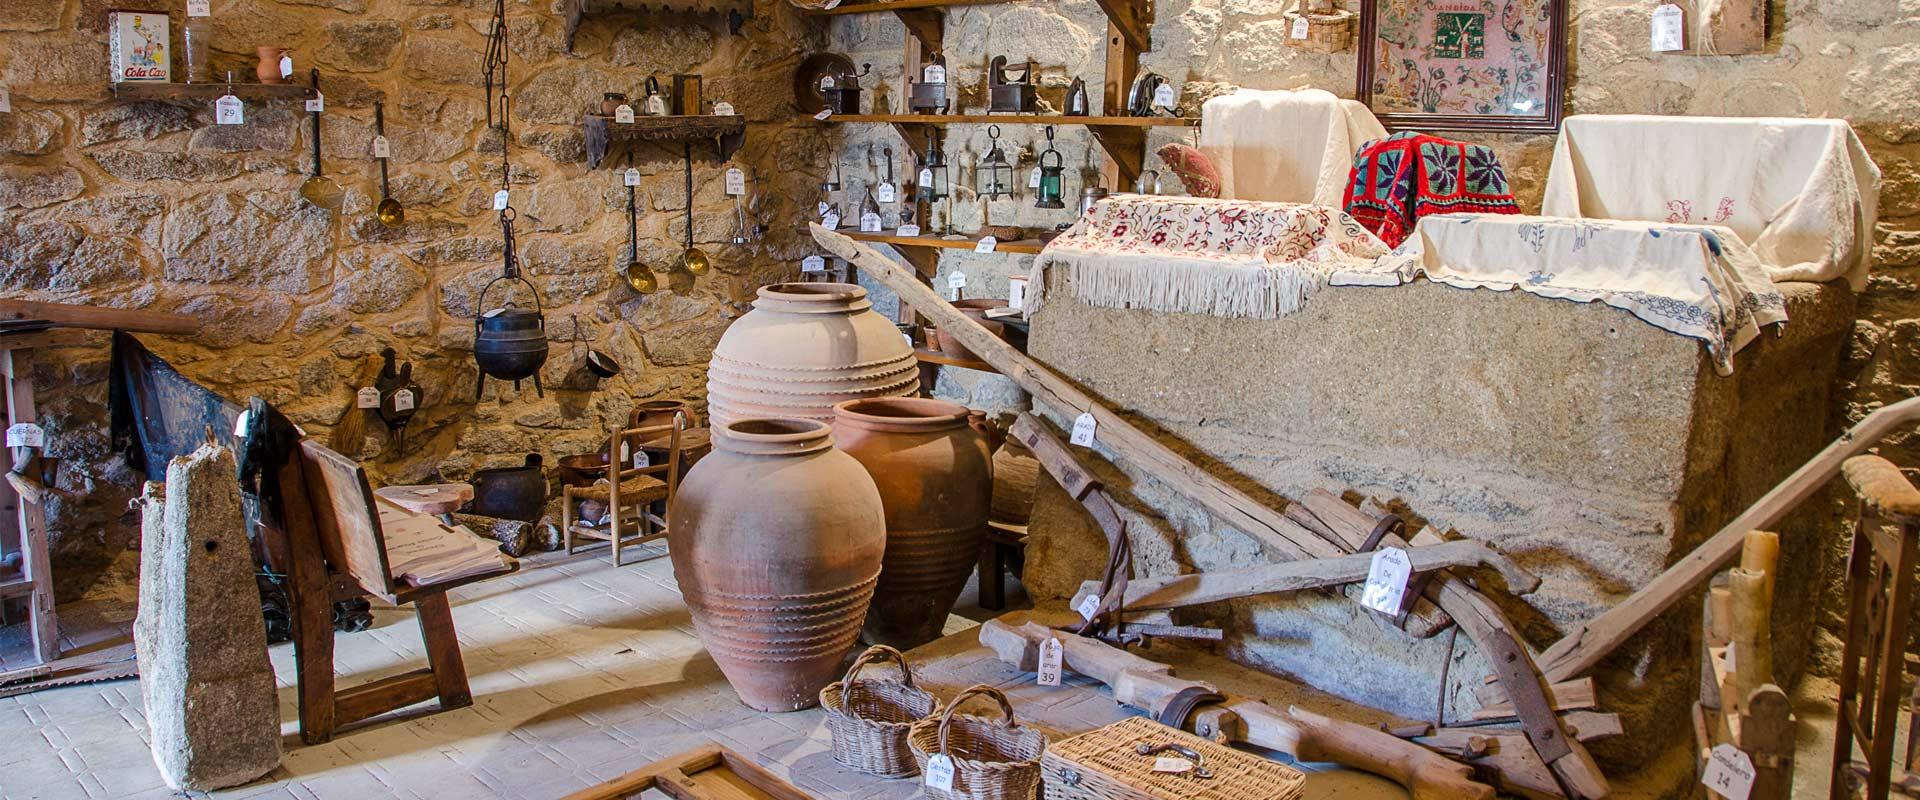 Local ethnographic museum in Peralejos de Abajo 